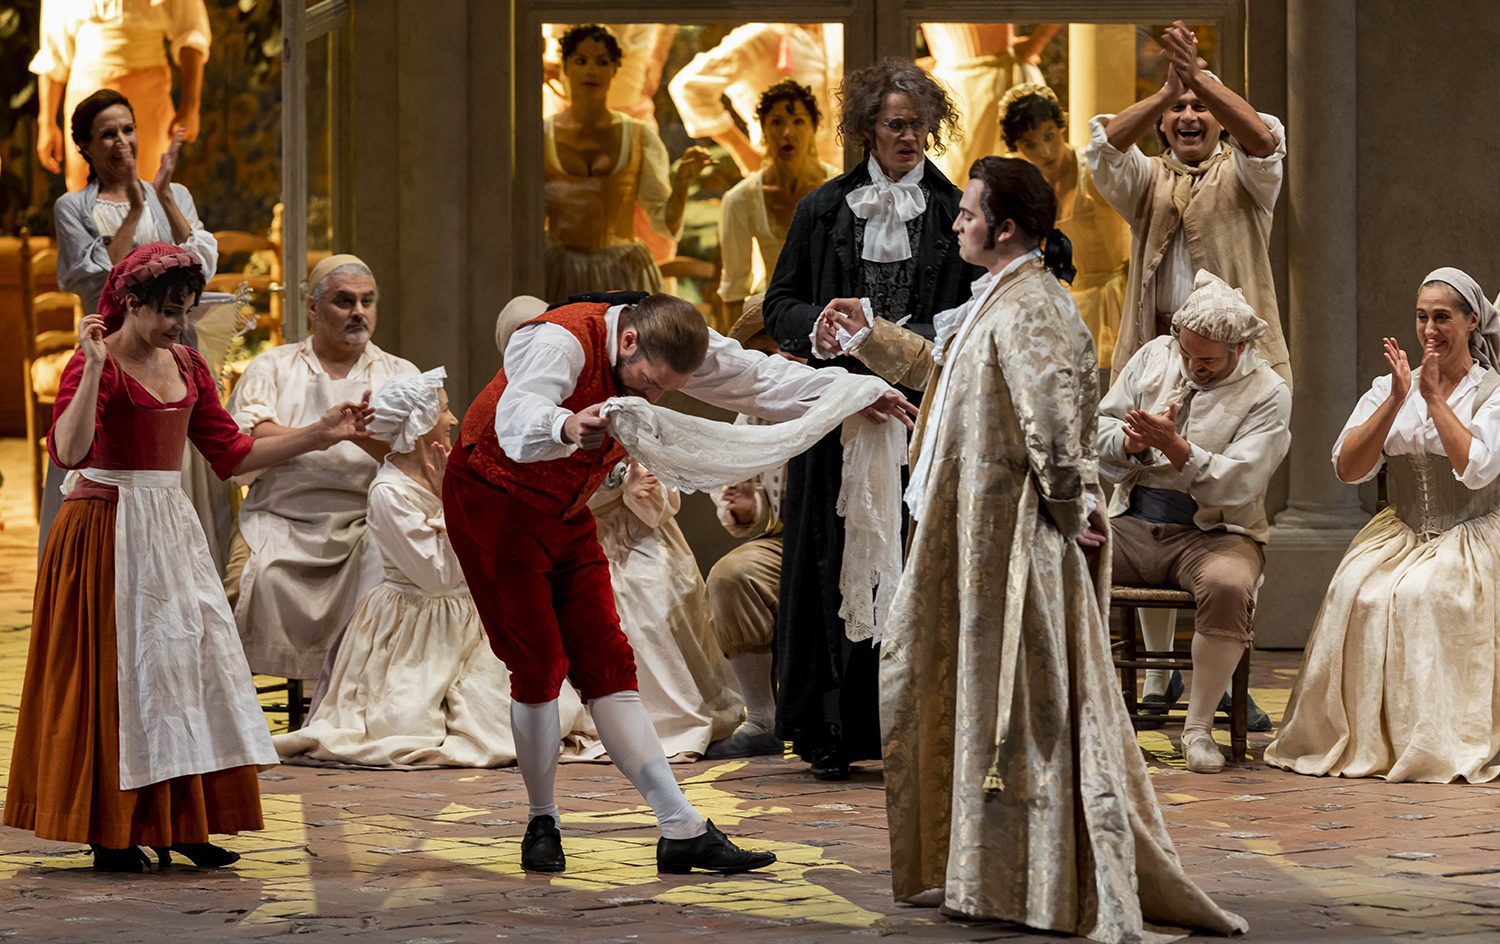 Le nozze di Figaro ©Miguel Lorenzo Mikel Ponce Les Arts (6)